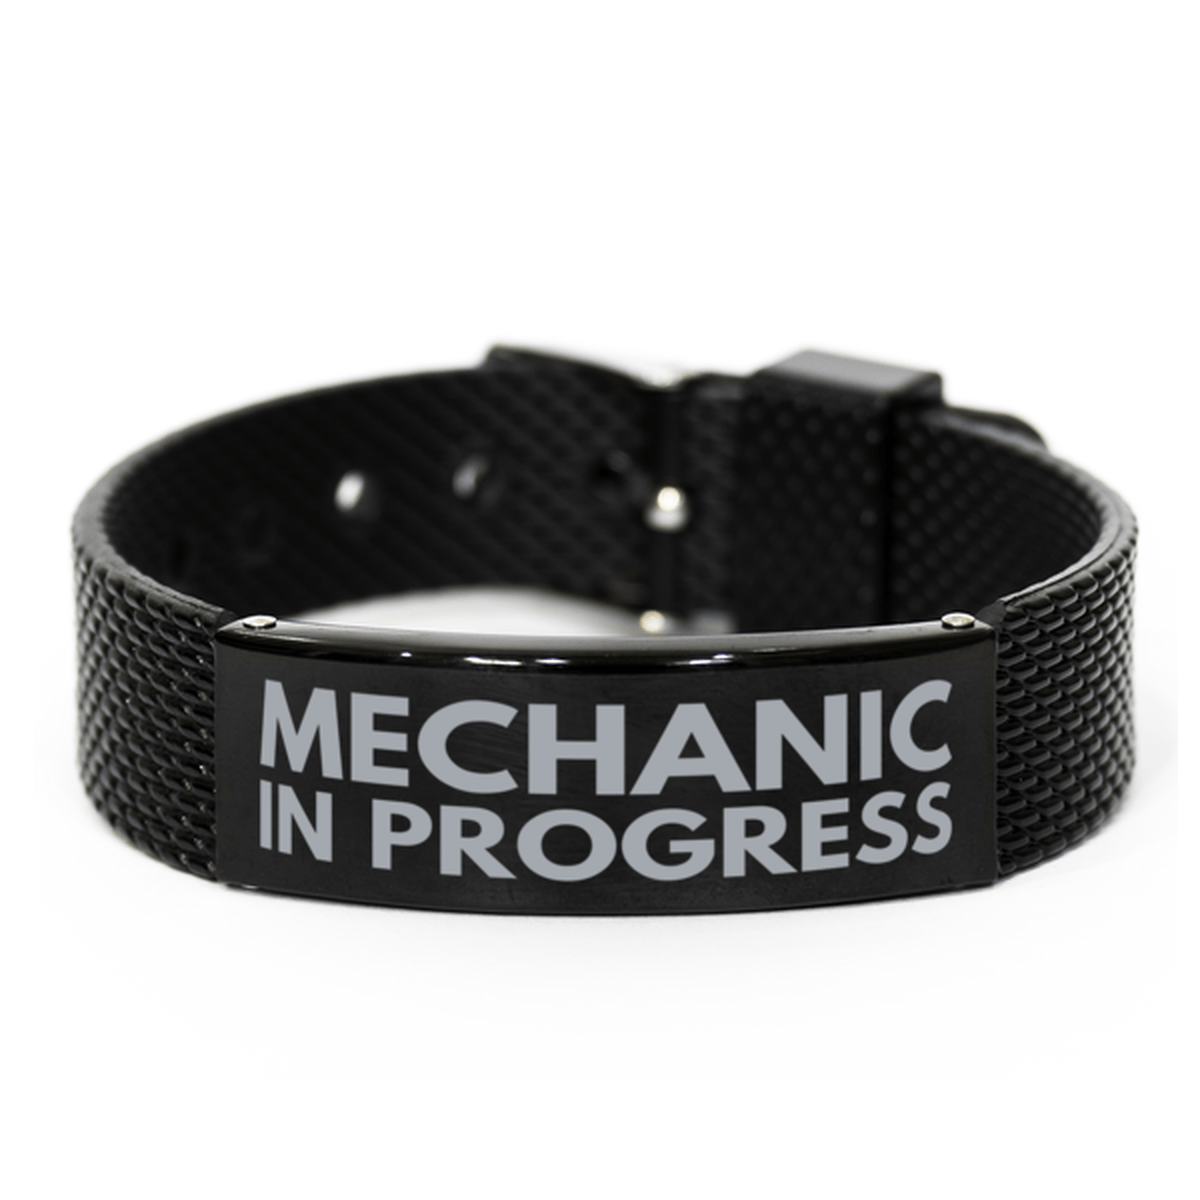 Inspirational Mechanic Black Shark Mesh Bracelet, Mechanic In Progress, Best Graduation Gifts for Students